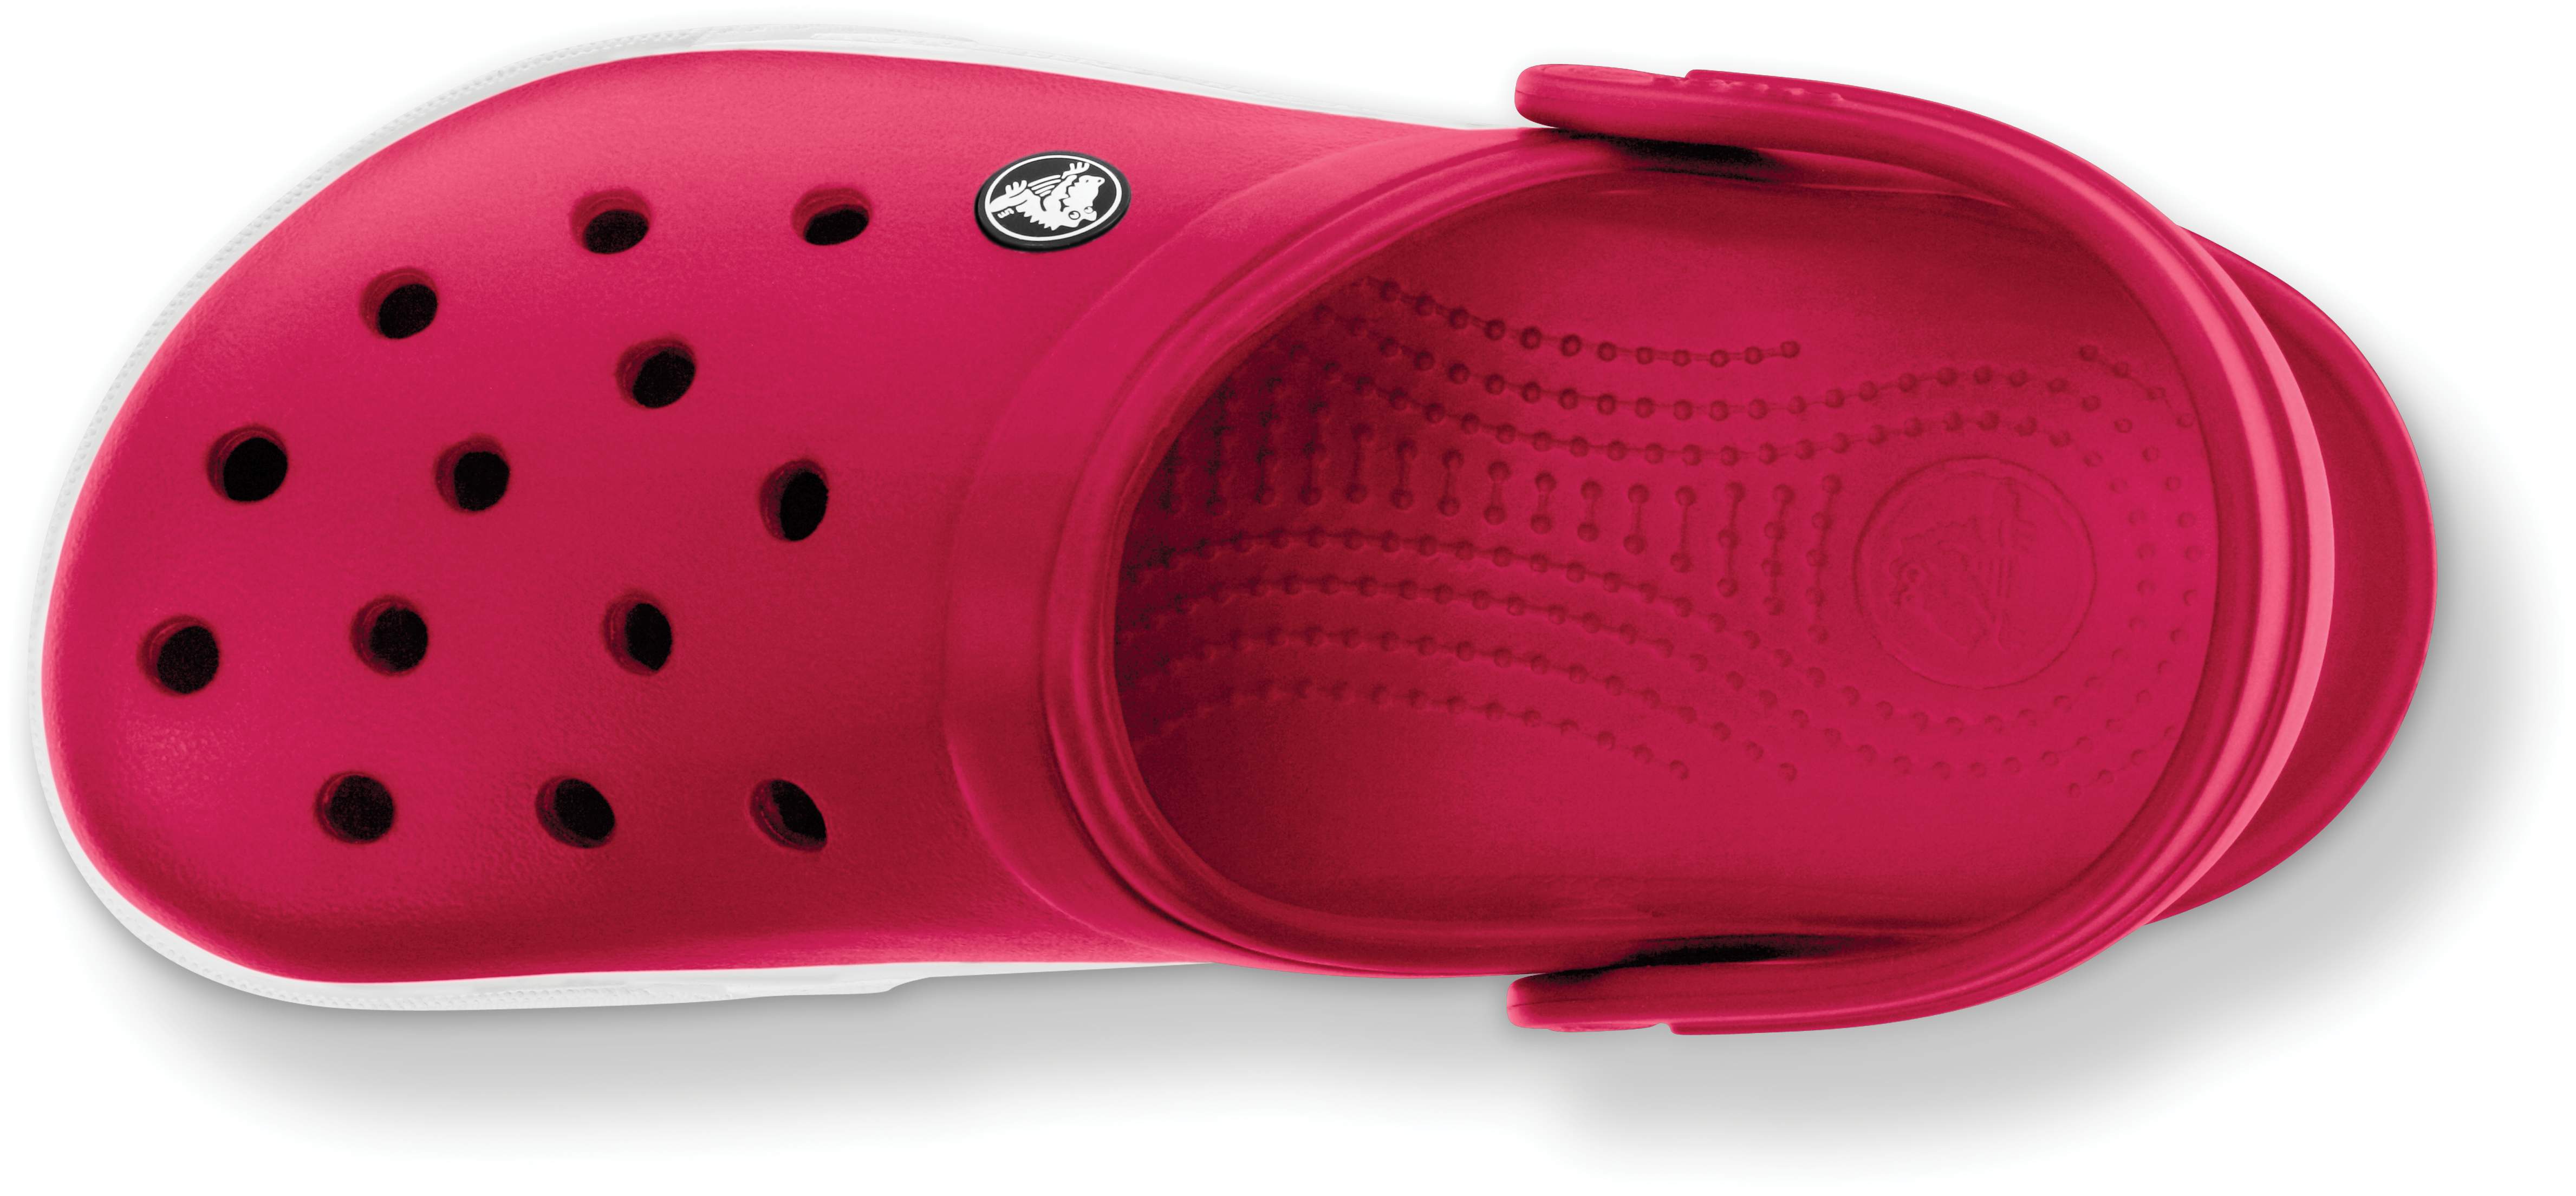 crocs crocband raspberry